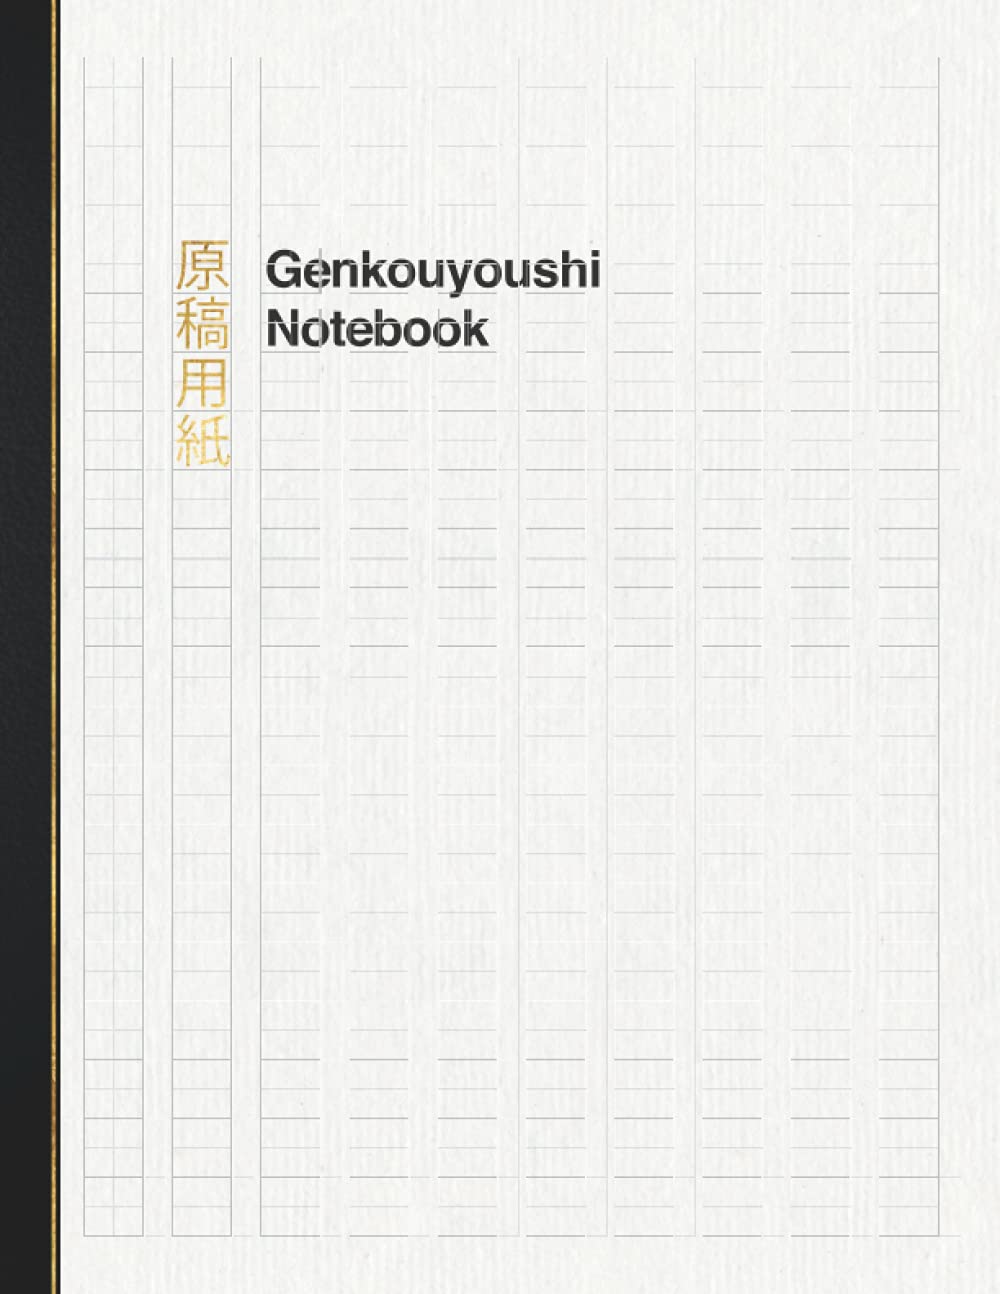 Japanese Writing Practice Book: Genkouyoushi Notebook, Hiragana